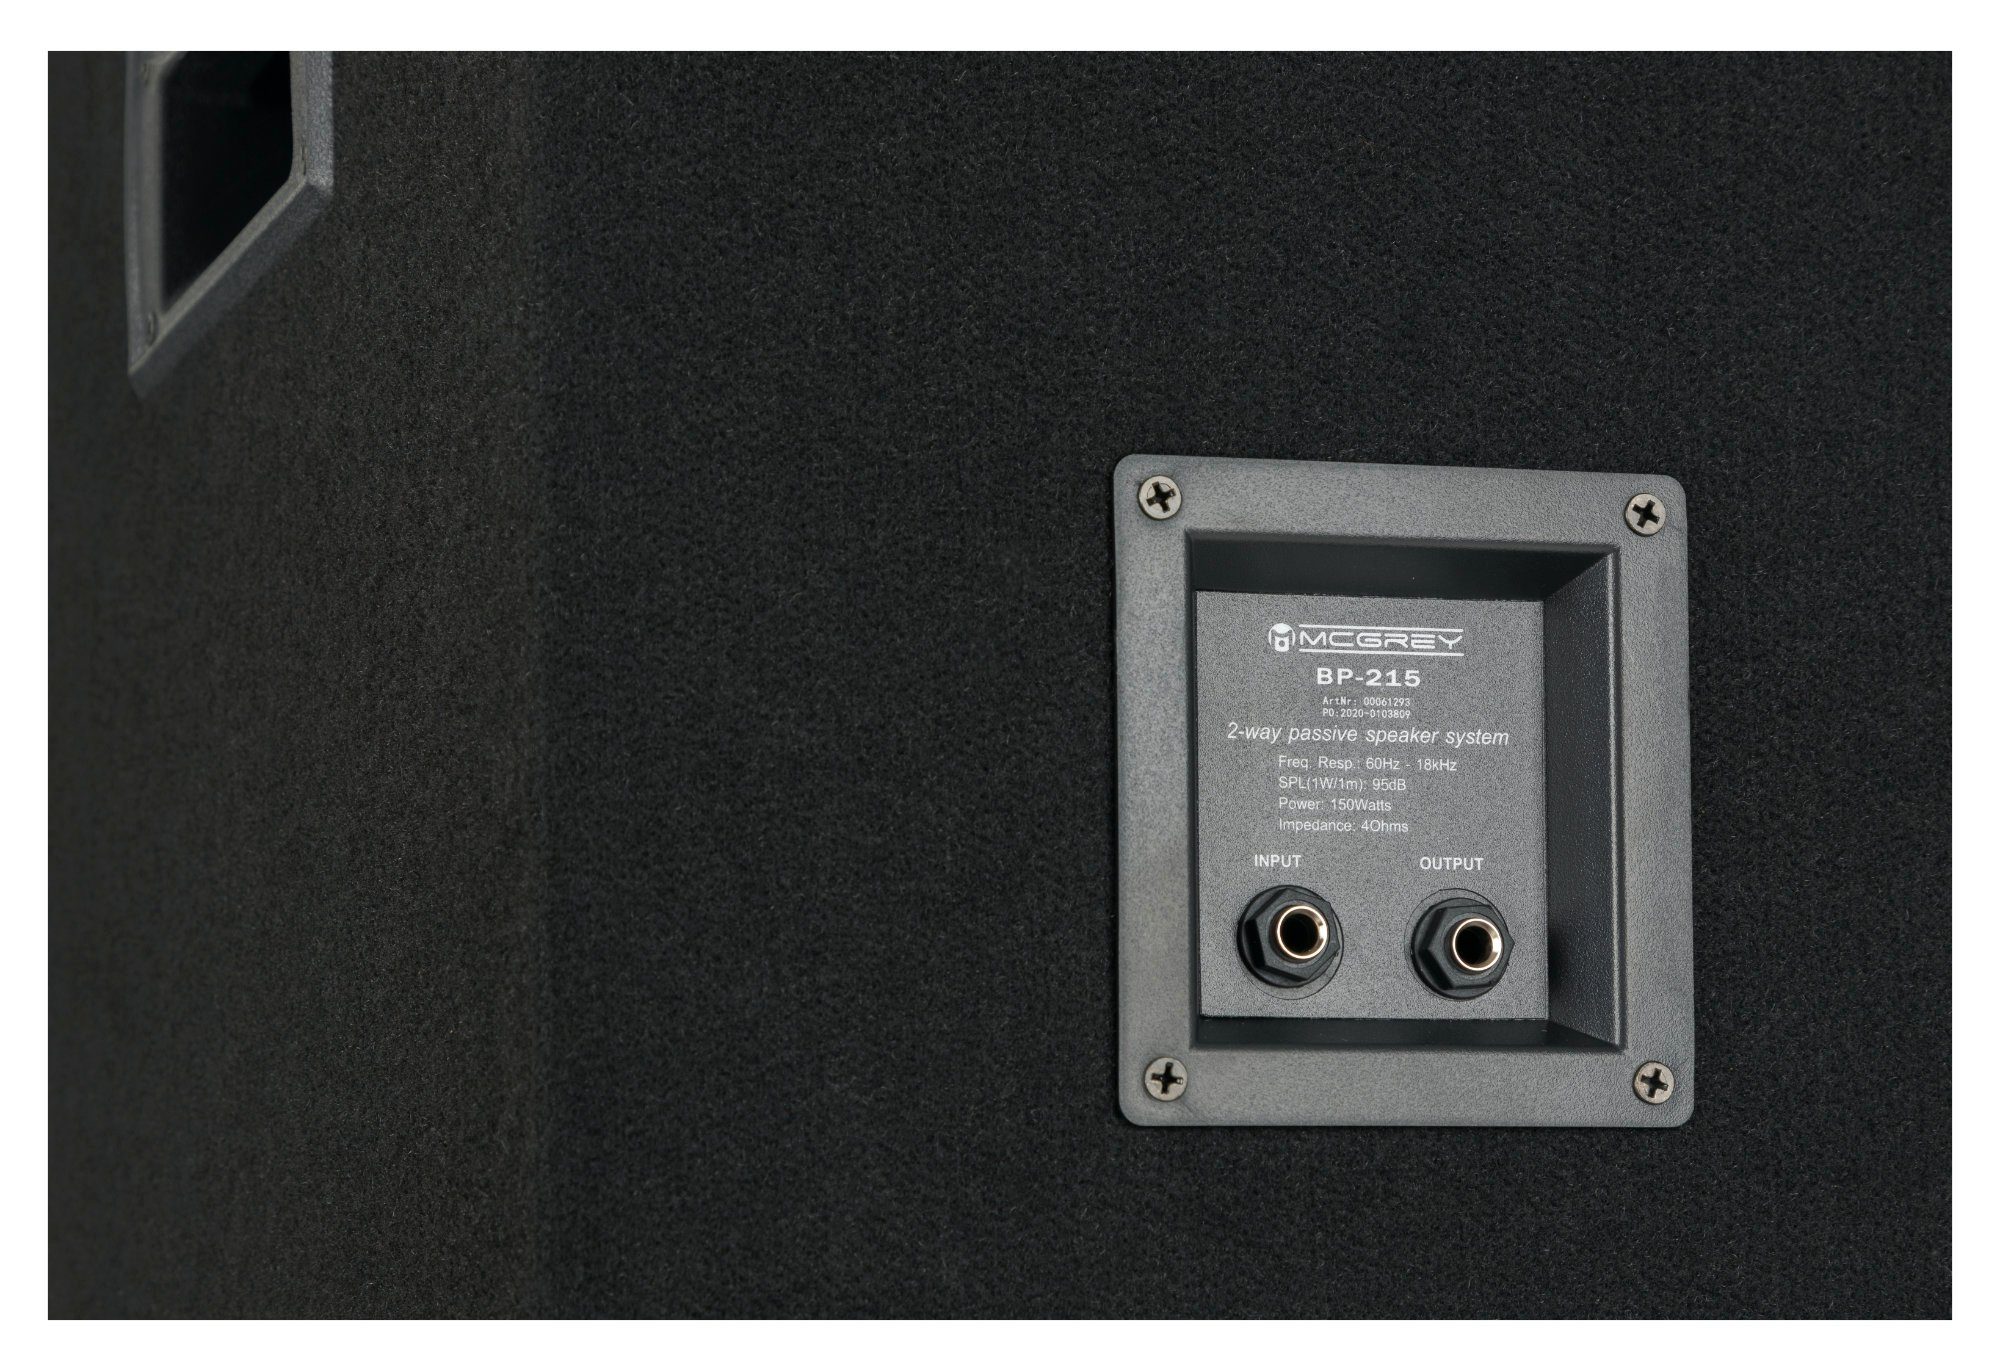 inkl. Mikrofon, McGrey & Kabel 150 (Bluetooth, 4-Kanal Powermixer PA-Anlage Bandpack - W, USB/SD-Slot BP-215 Lautsprechersystem Stative) -